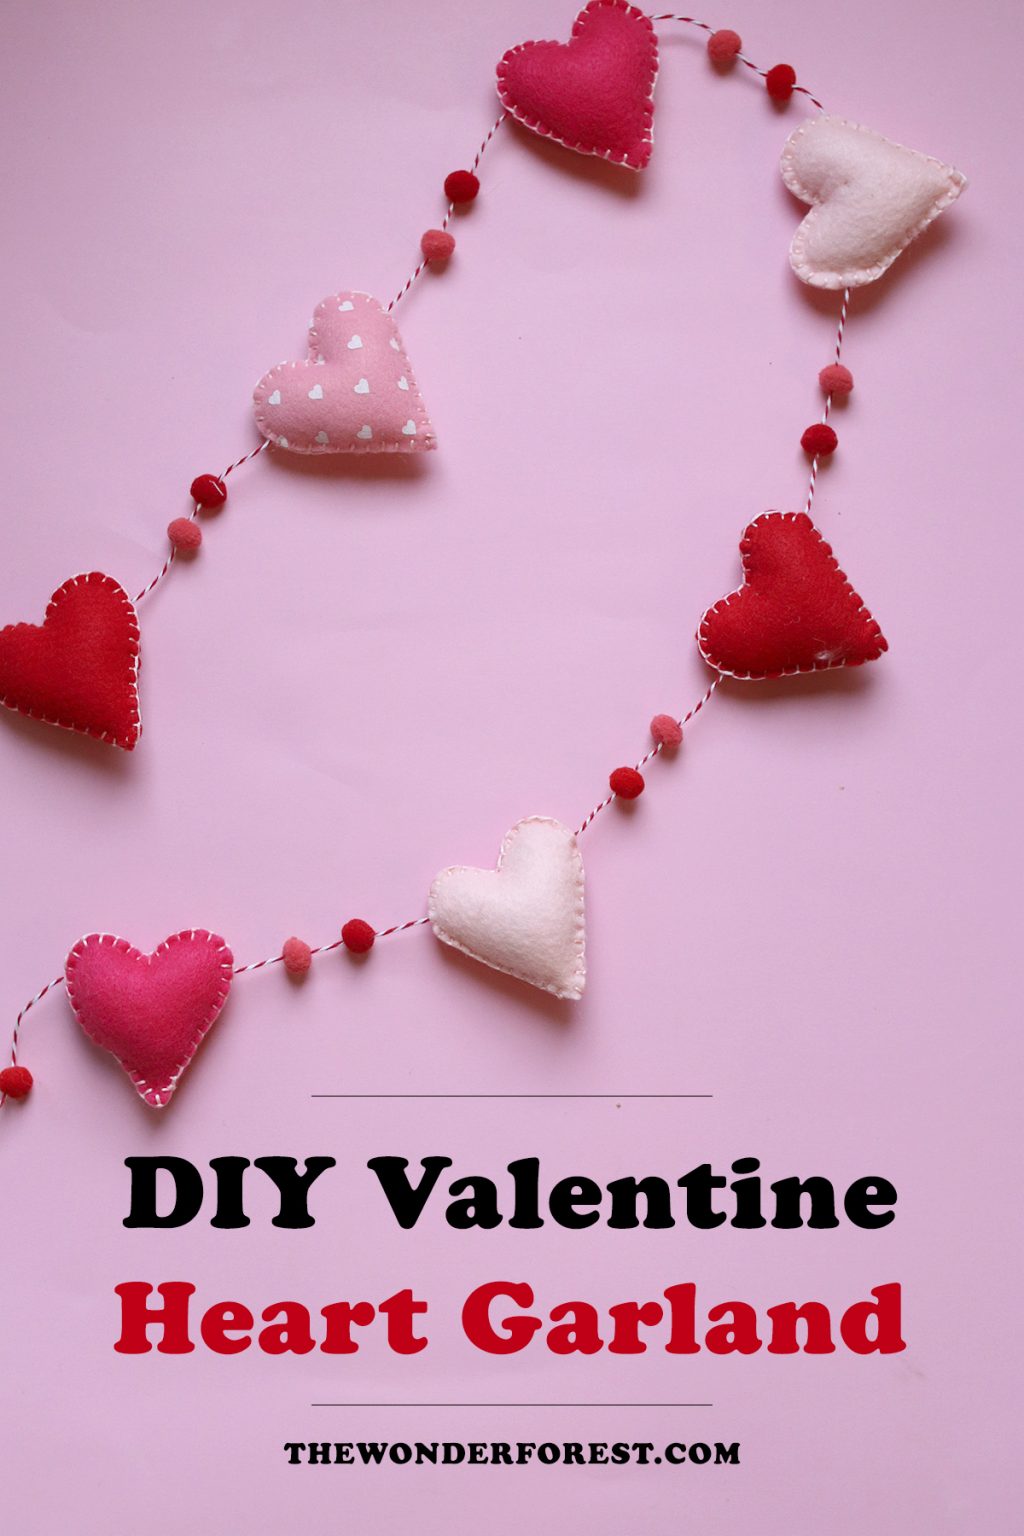 How to Make a Valentine Garland of Hearts - Valentine's Day Crafts